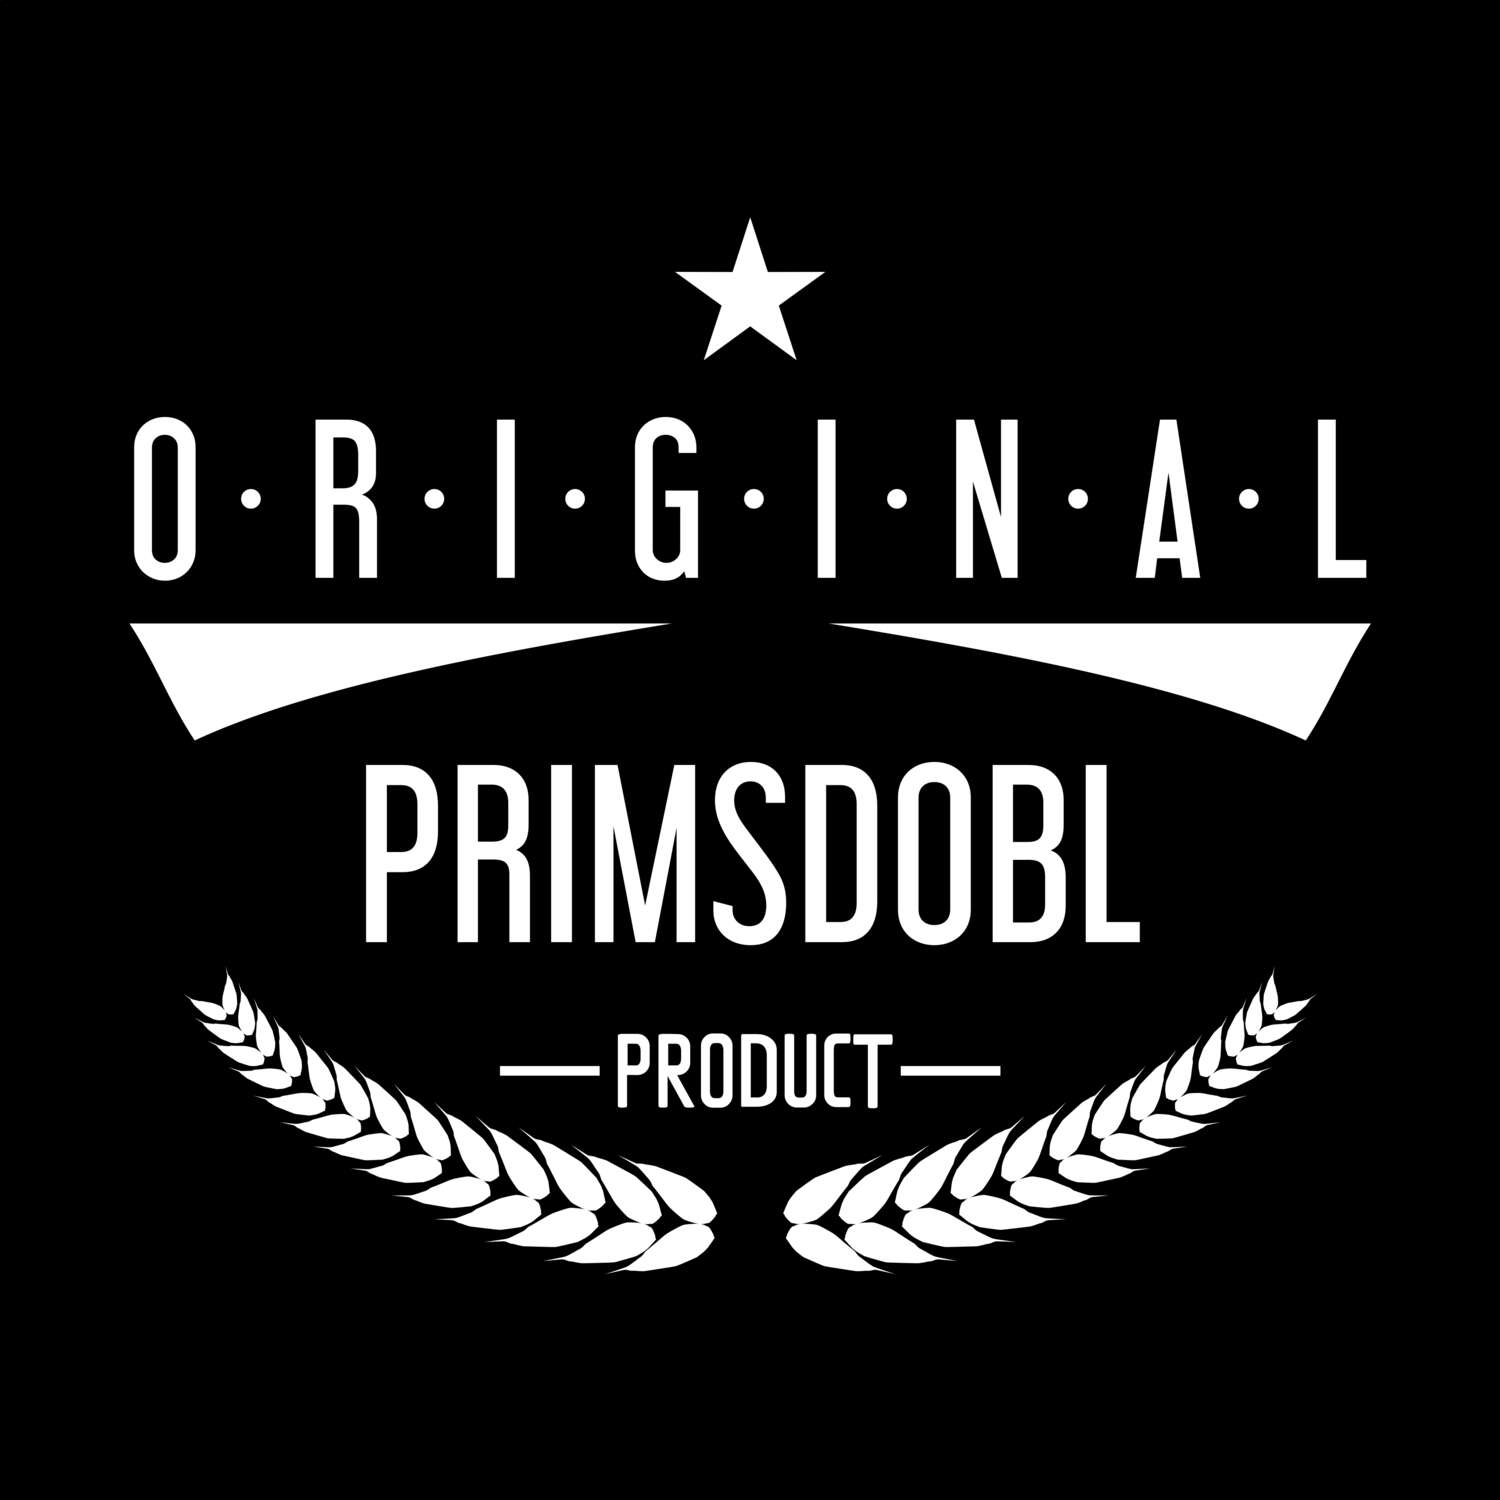 Primsdobl T-Shirt »Original Product«